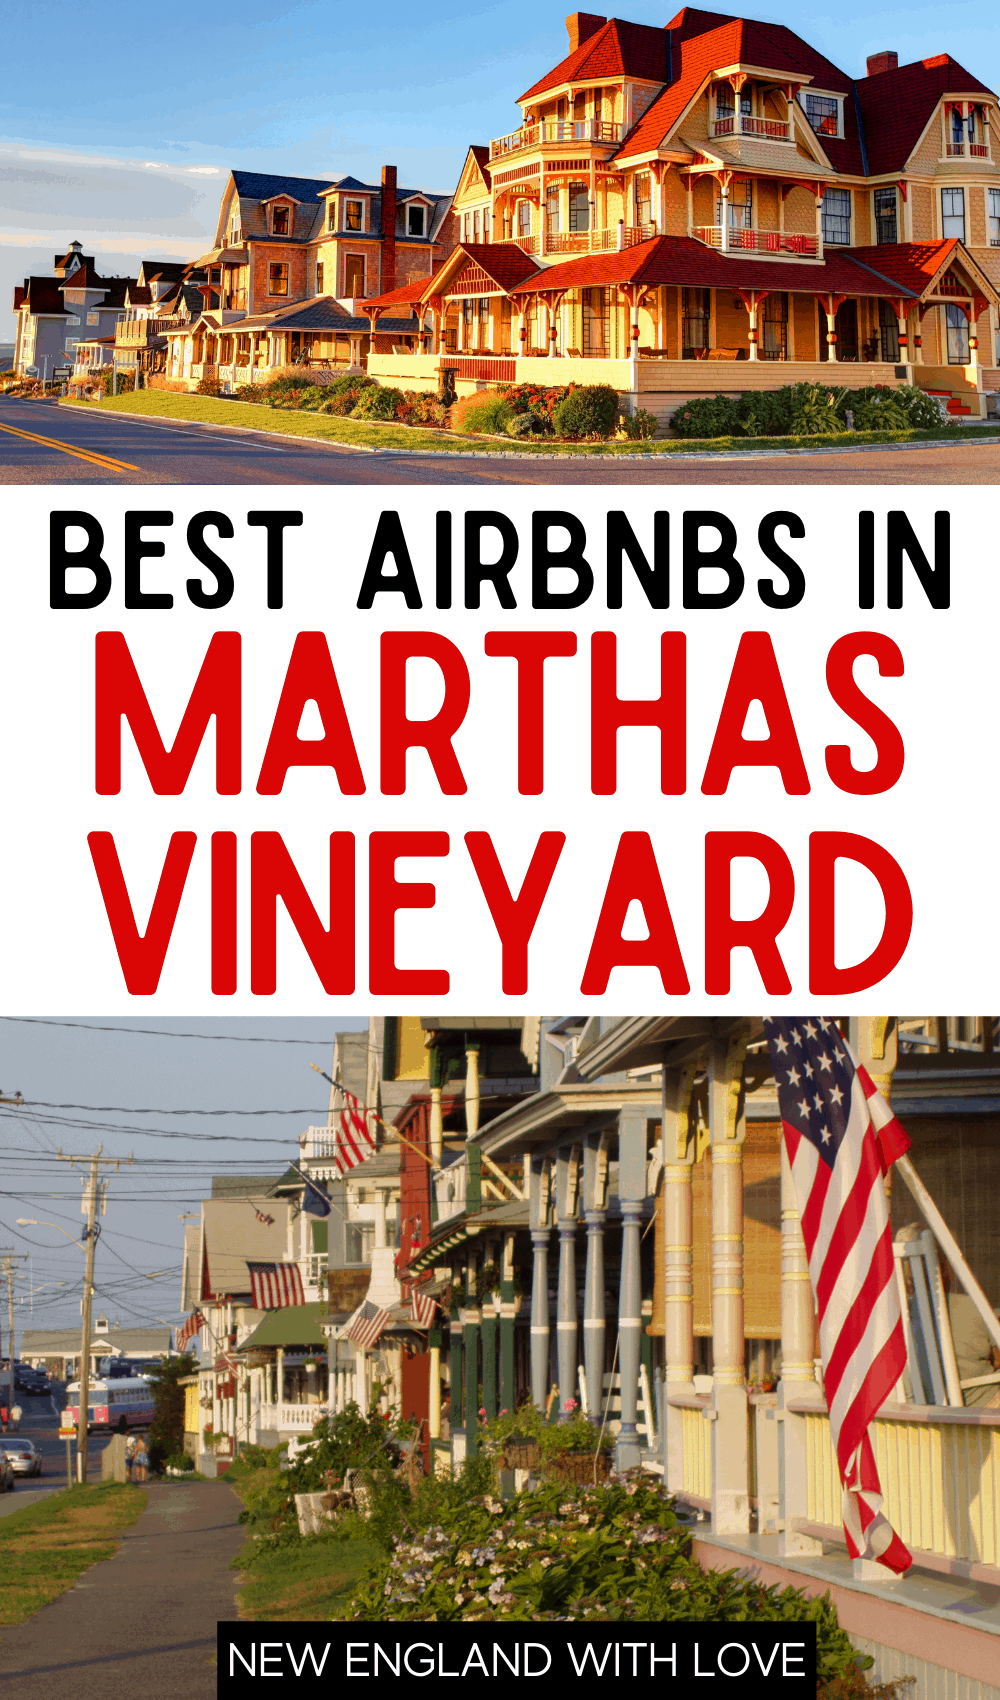 Pinterest graphic reading "BEST AIRBNBS IN MARTHA'S VINEYARD"